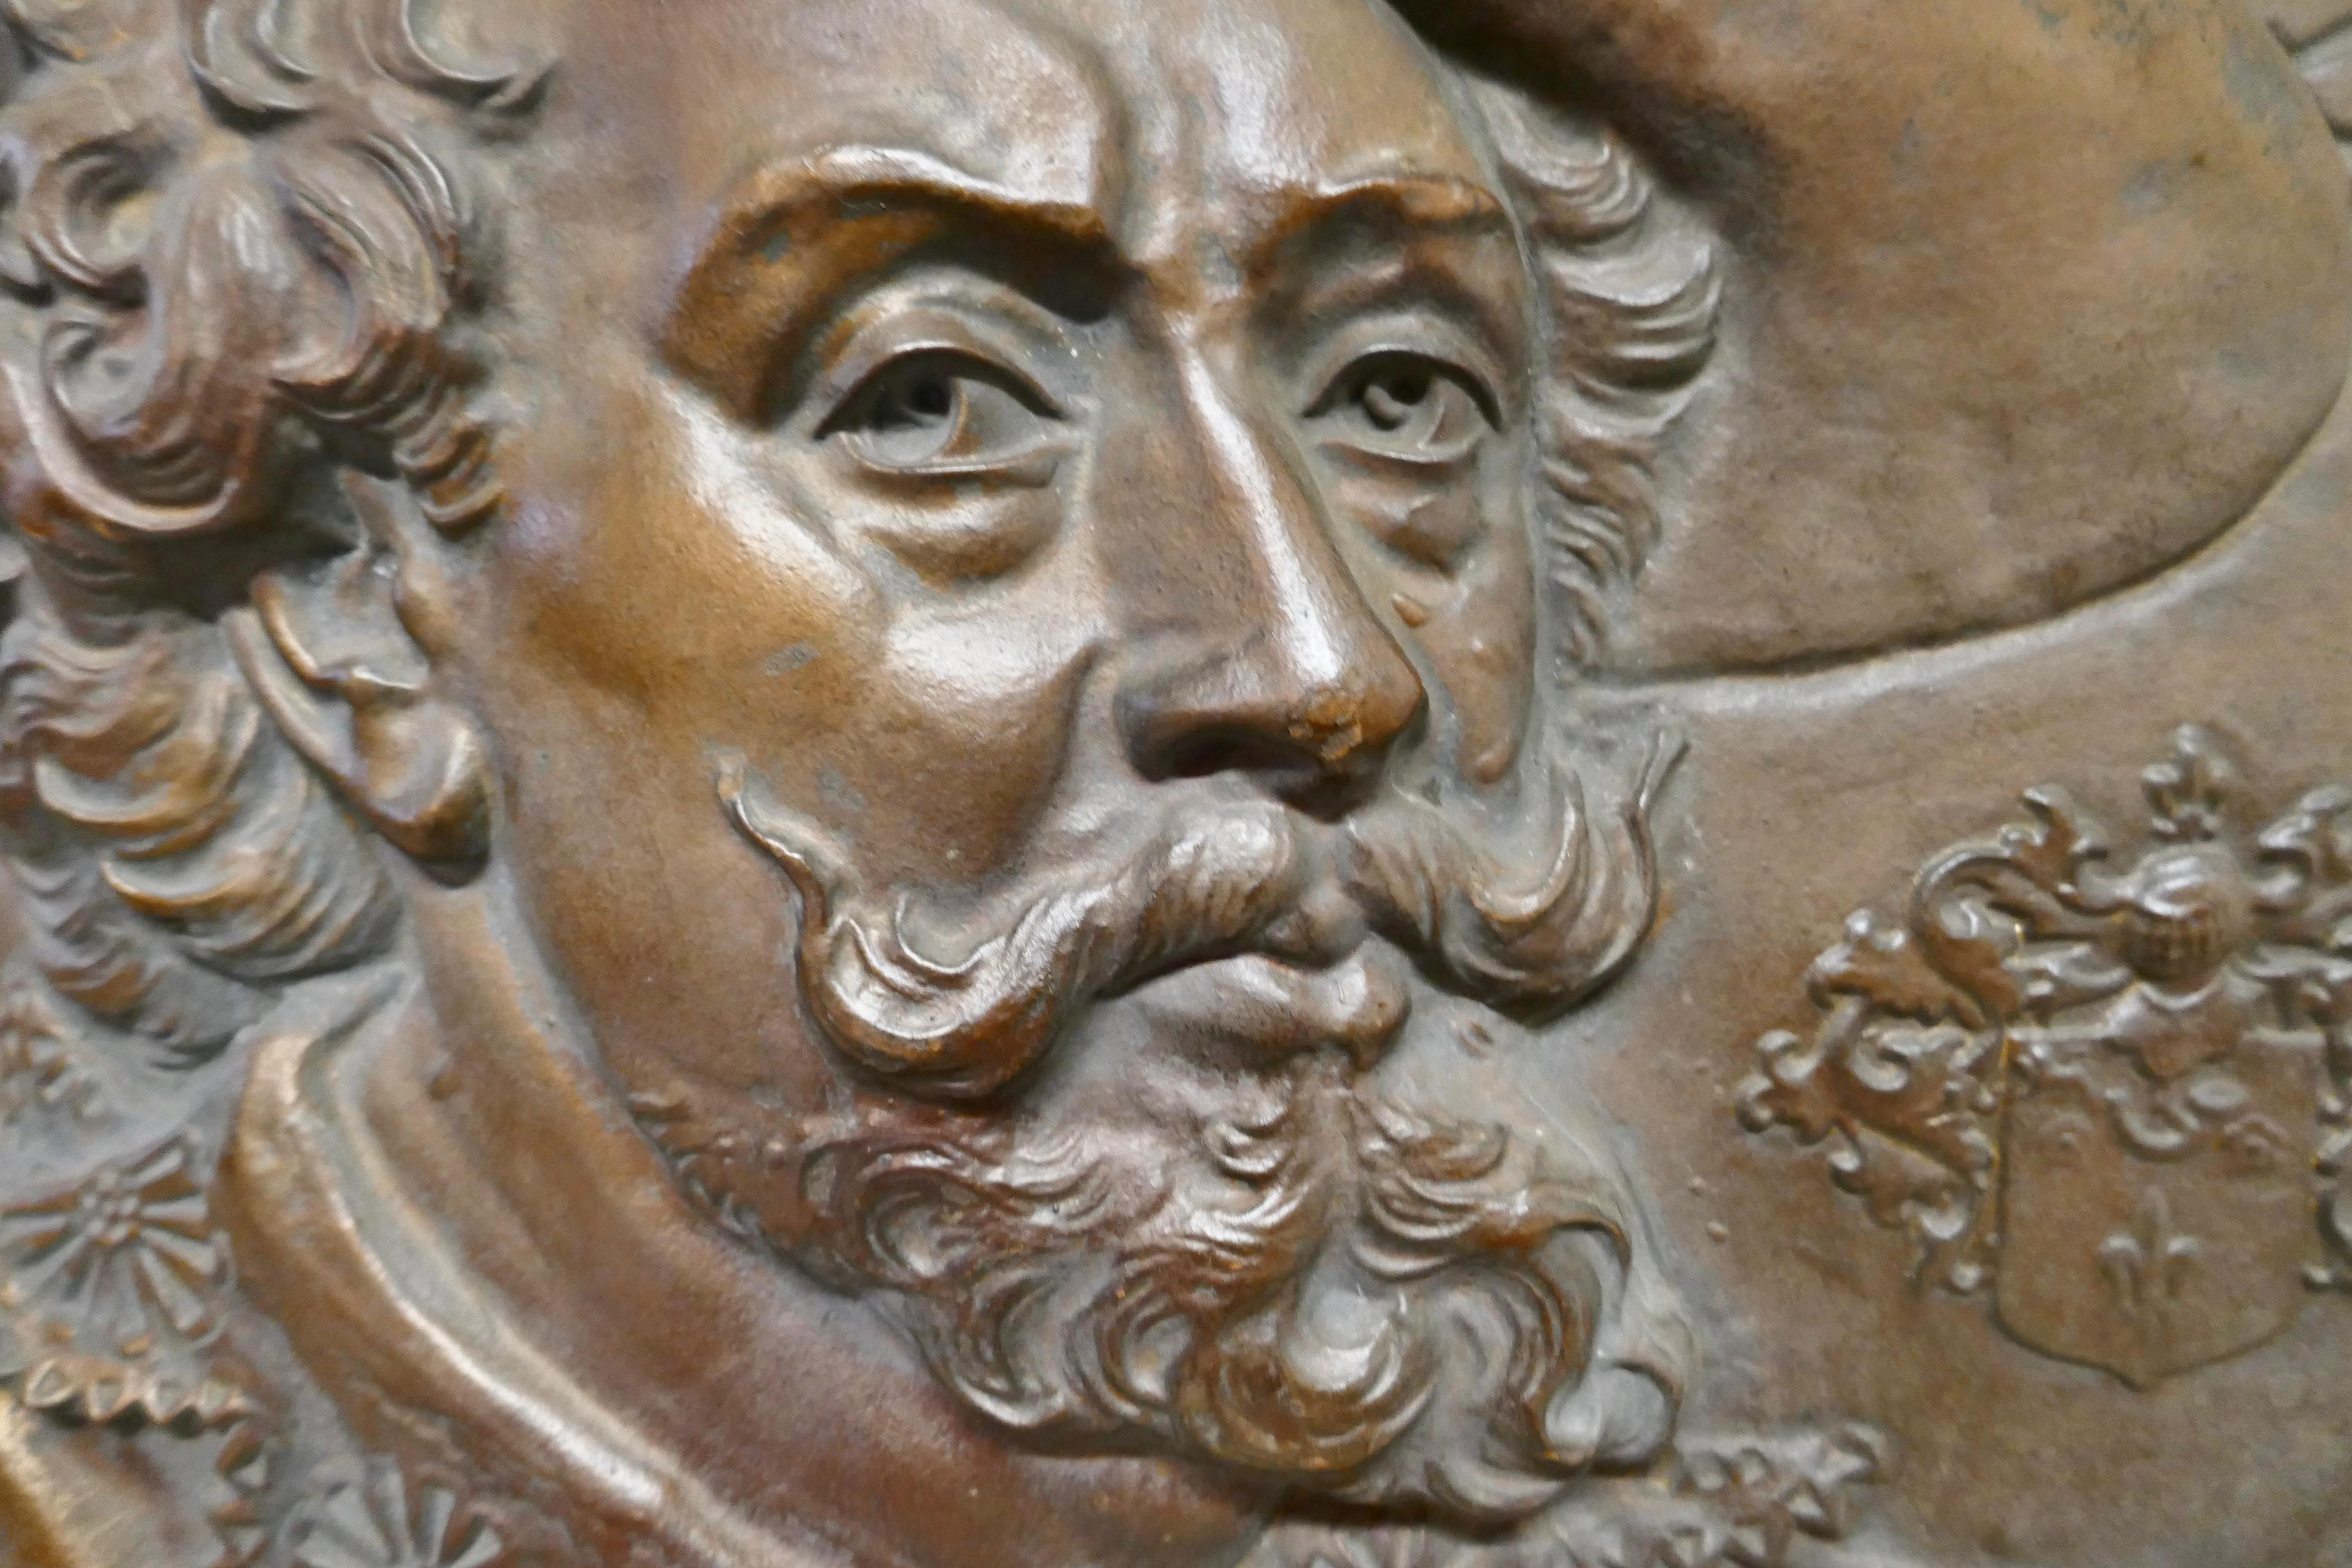 20th Century Cast Roundel Portrait Plaque of Peter Paul Rubens, 1577-1640